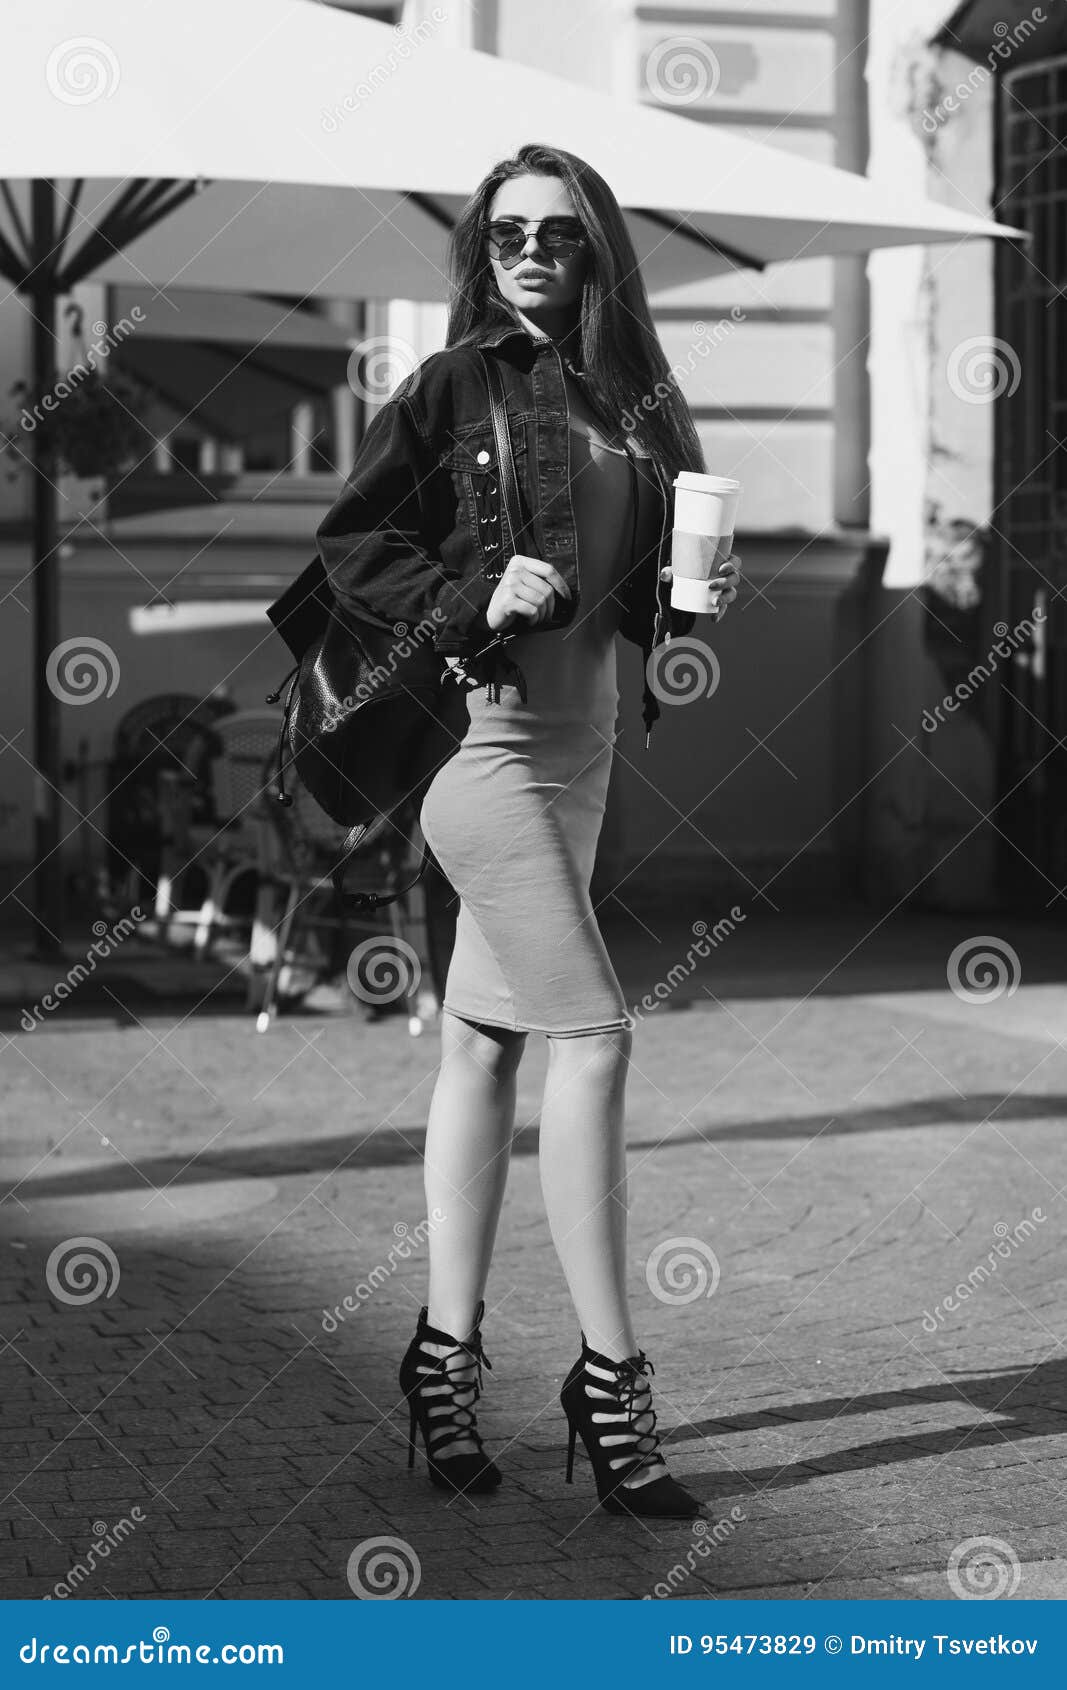 Stylish Girl Walking in City Stock Image - Image of beautiful, leather ...